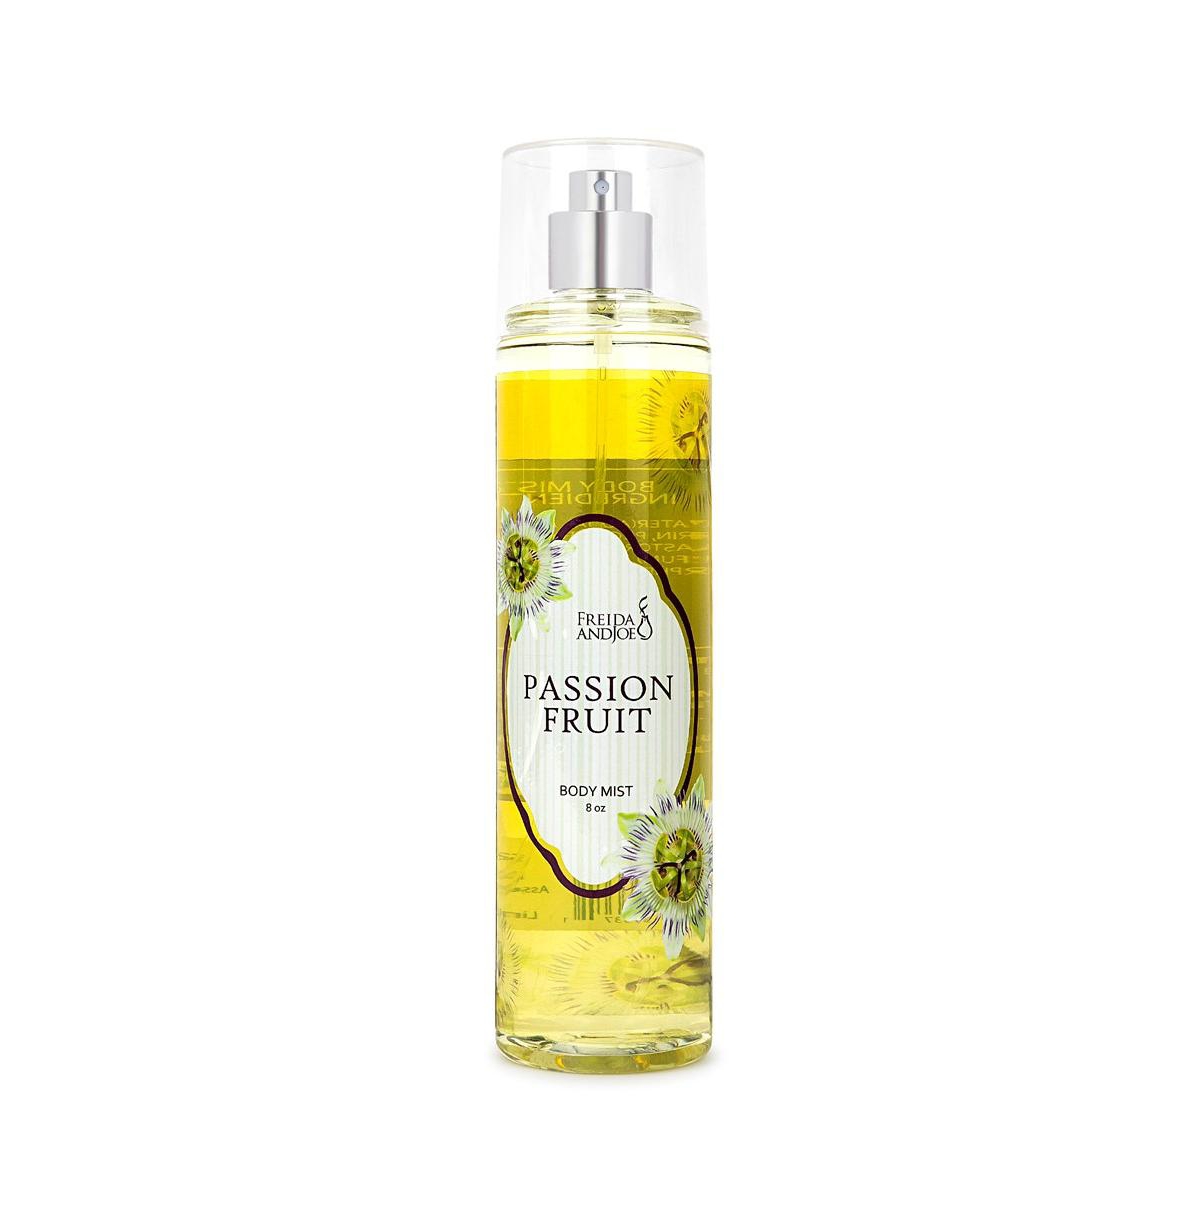 Passion Fruit Fine Fragrance Body Mist in 8oz Spray Bottle - Yellow